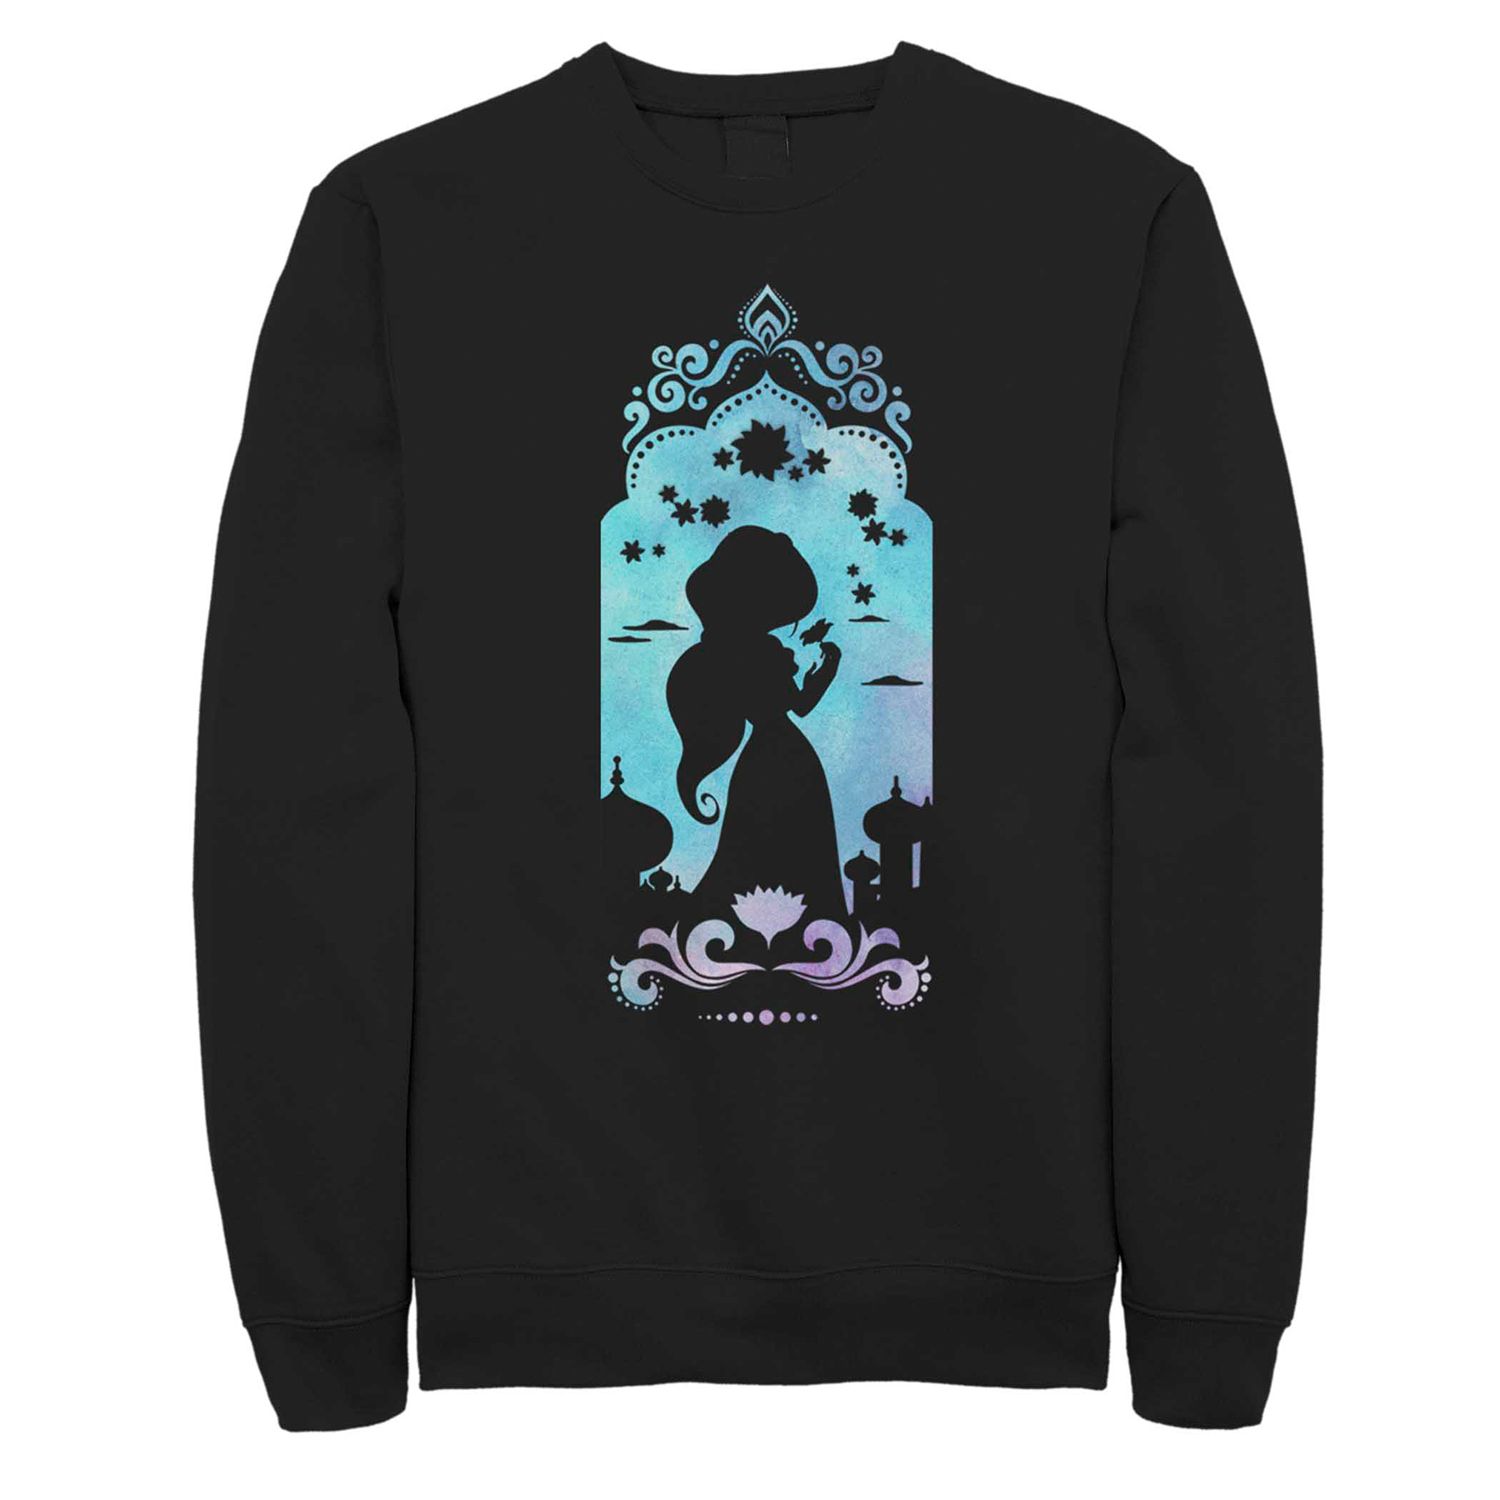 Image for Disney Juniors' 's Aladdin Jasmine Watercolor Graphic Sweatshirt at Kohl's.